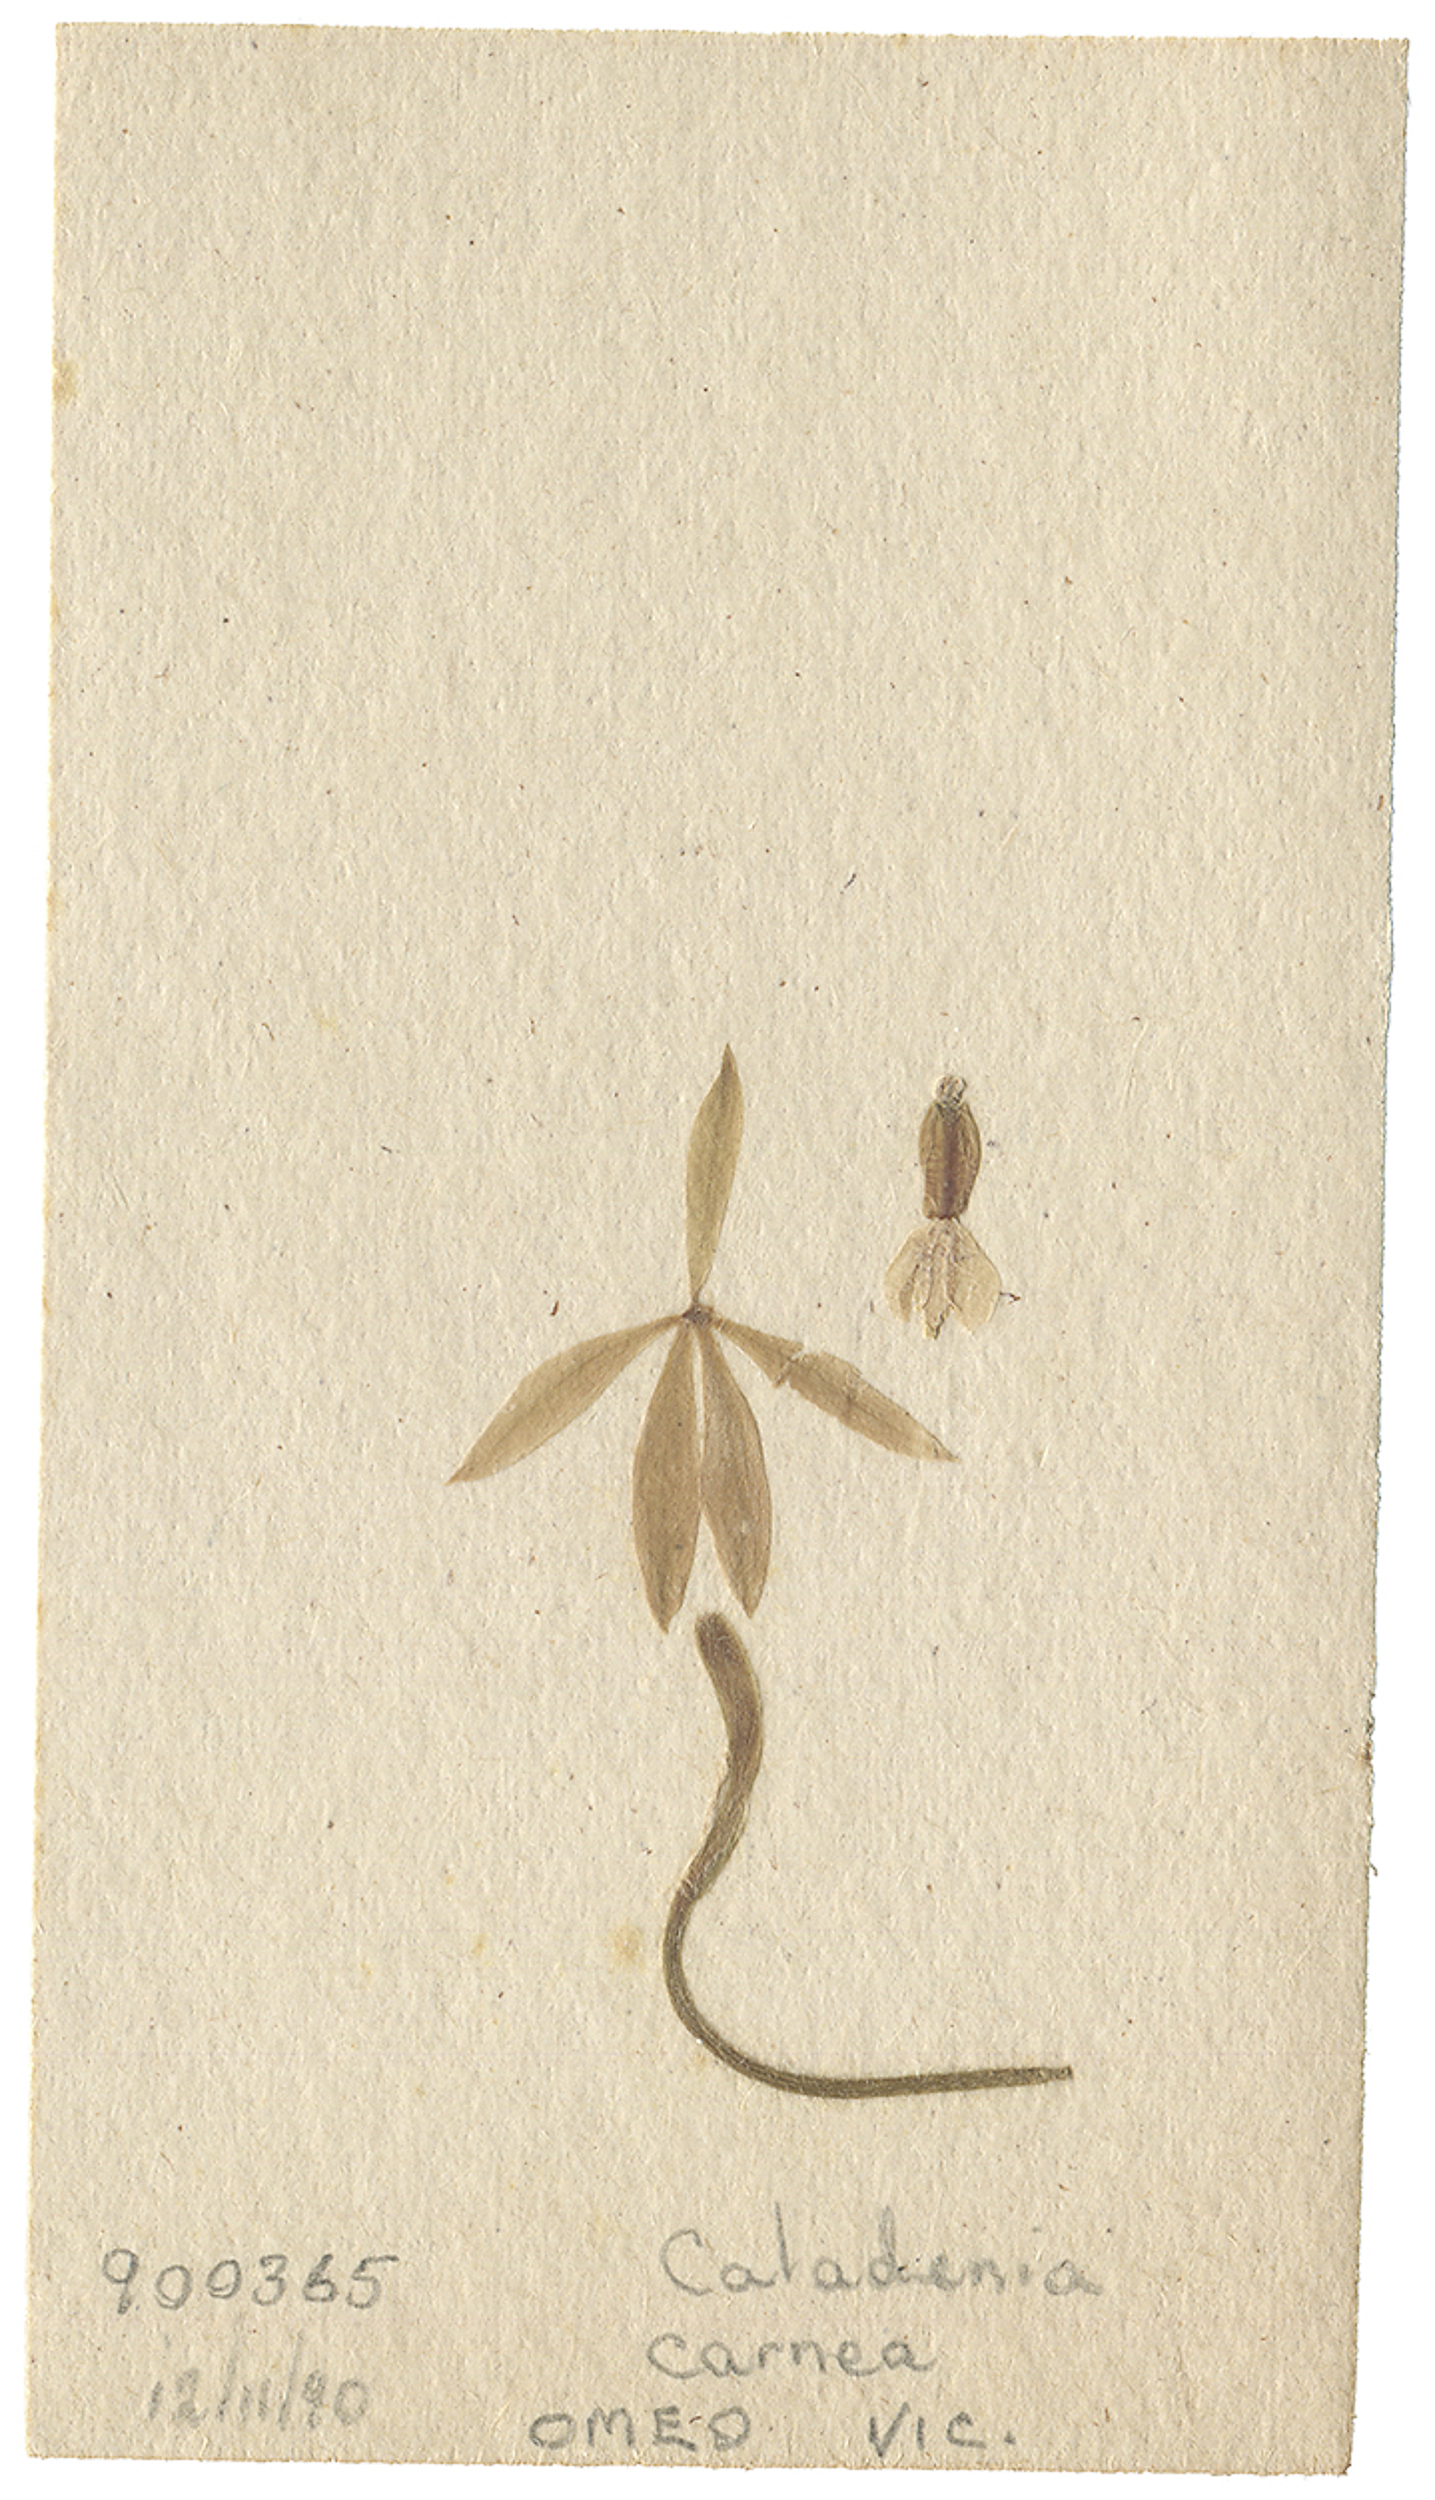 LYON 2017-06-24 Phils Orchid Specimens 200_E.jpg